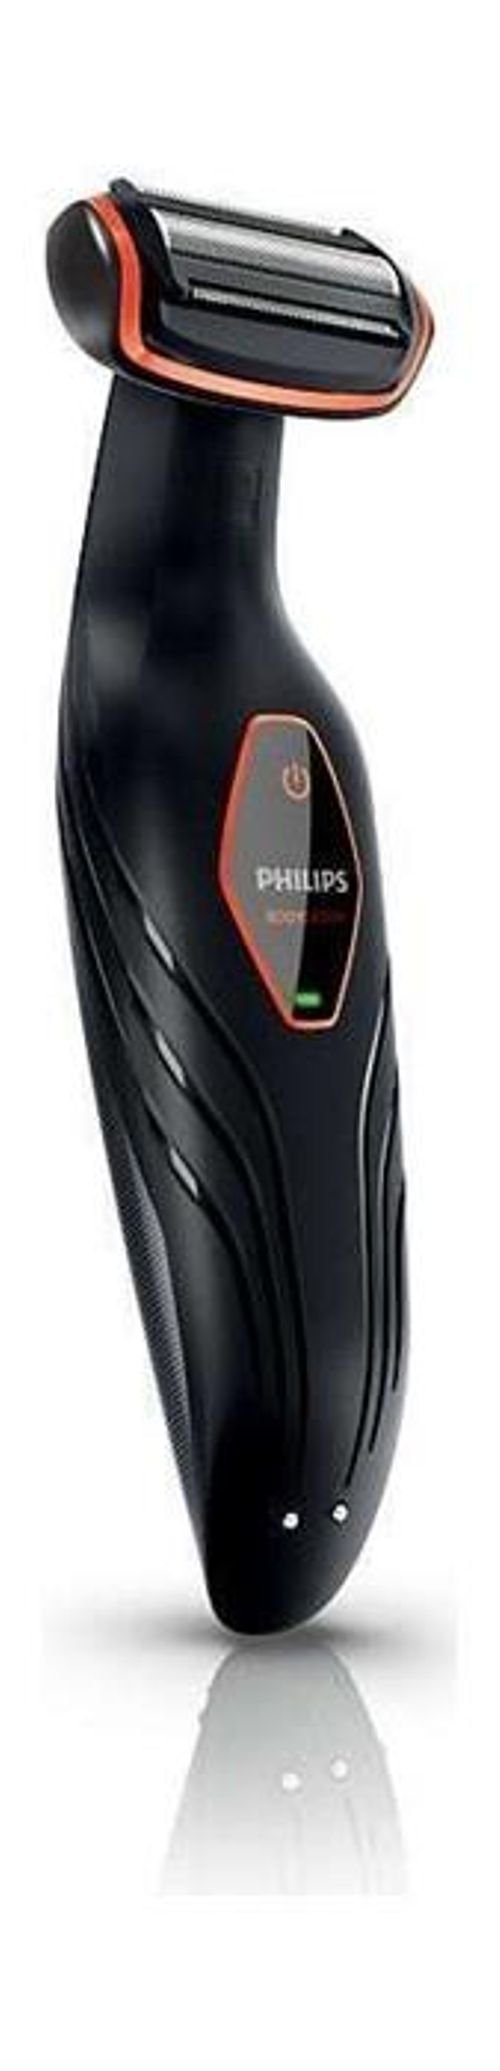 Philips Body Groomer + Ceramic Textured Discs - BG2024/15 + HP6577/00